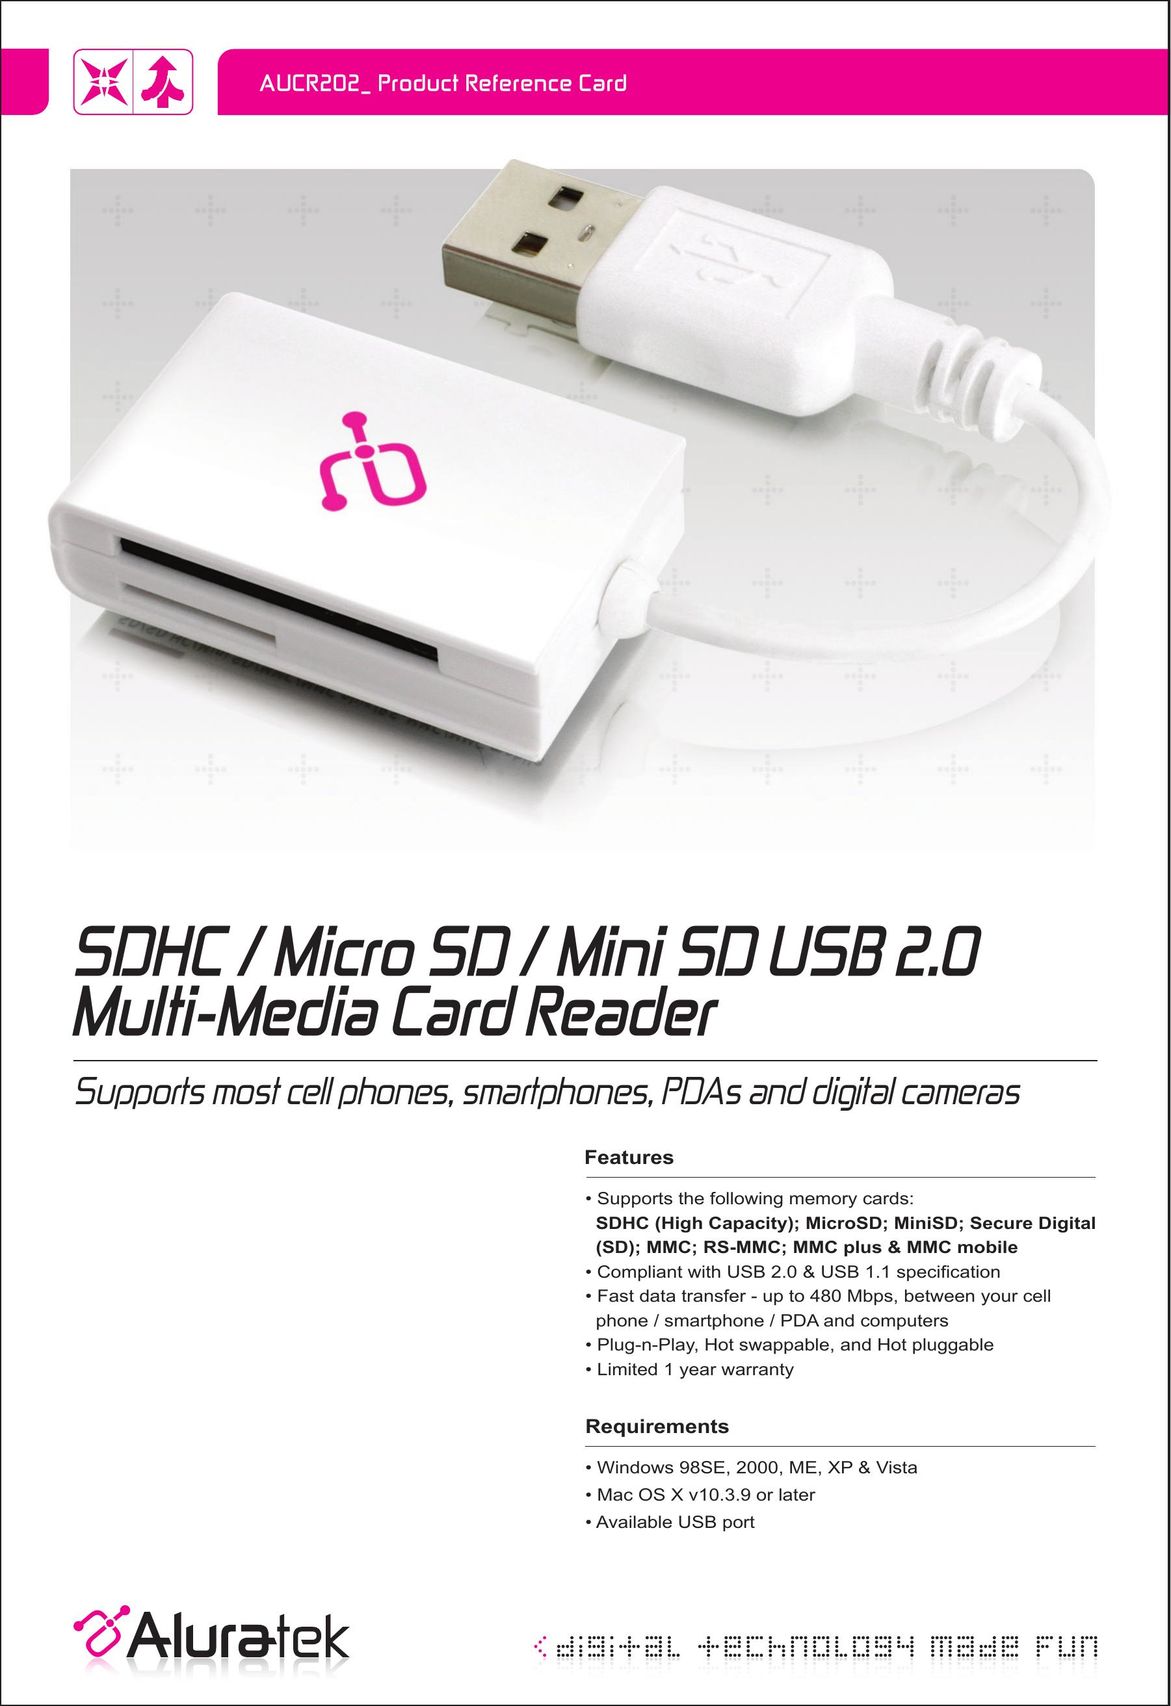 Aluratek Mini SD USB 2.0 Computer Hardware User Manual